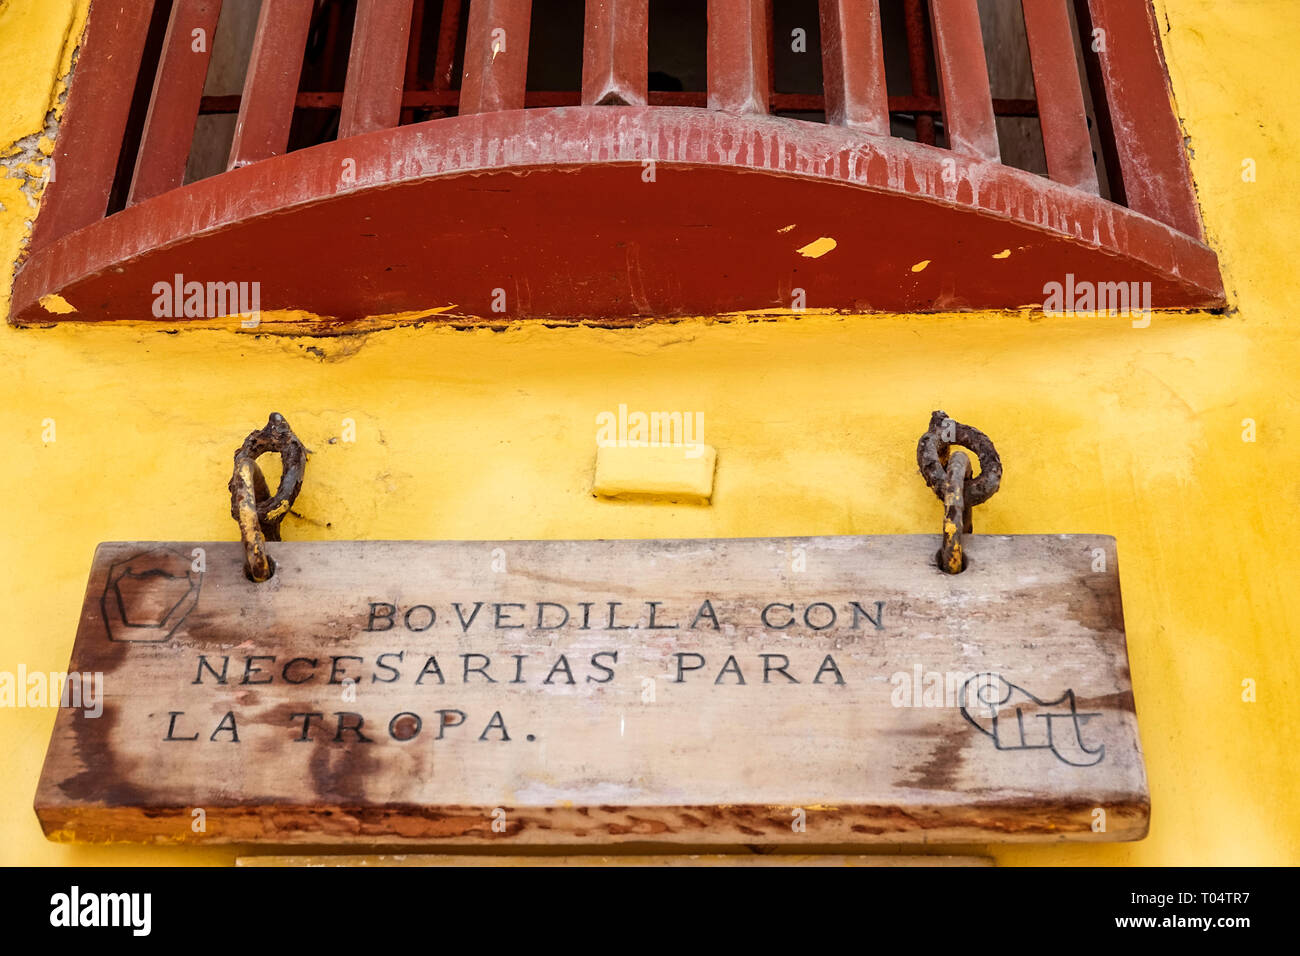 Cartagena Colombia,Playa de las Bovedas,former army barracks vault,sign,Spanish language,visitors travel traveling tour tourist tourism landmark landm Stock Photo